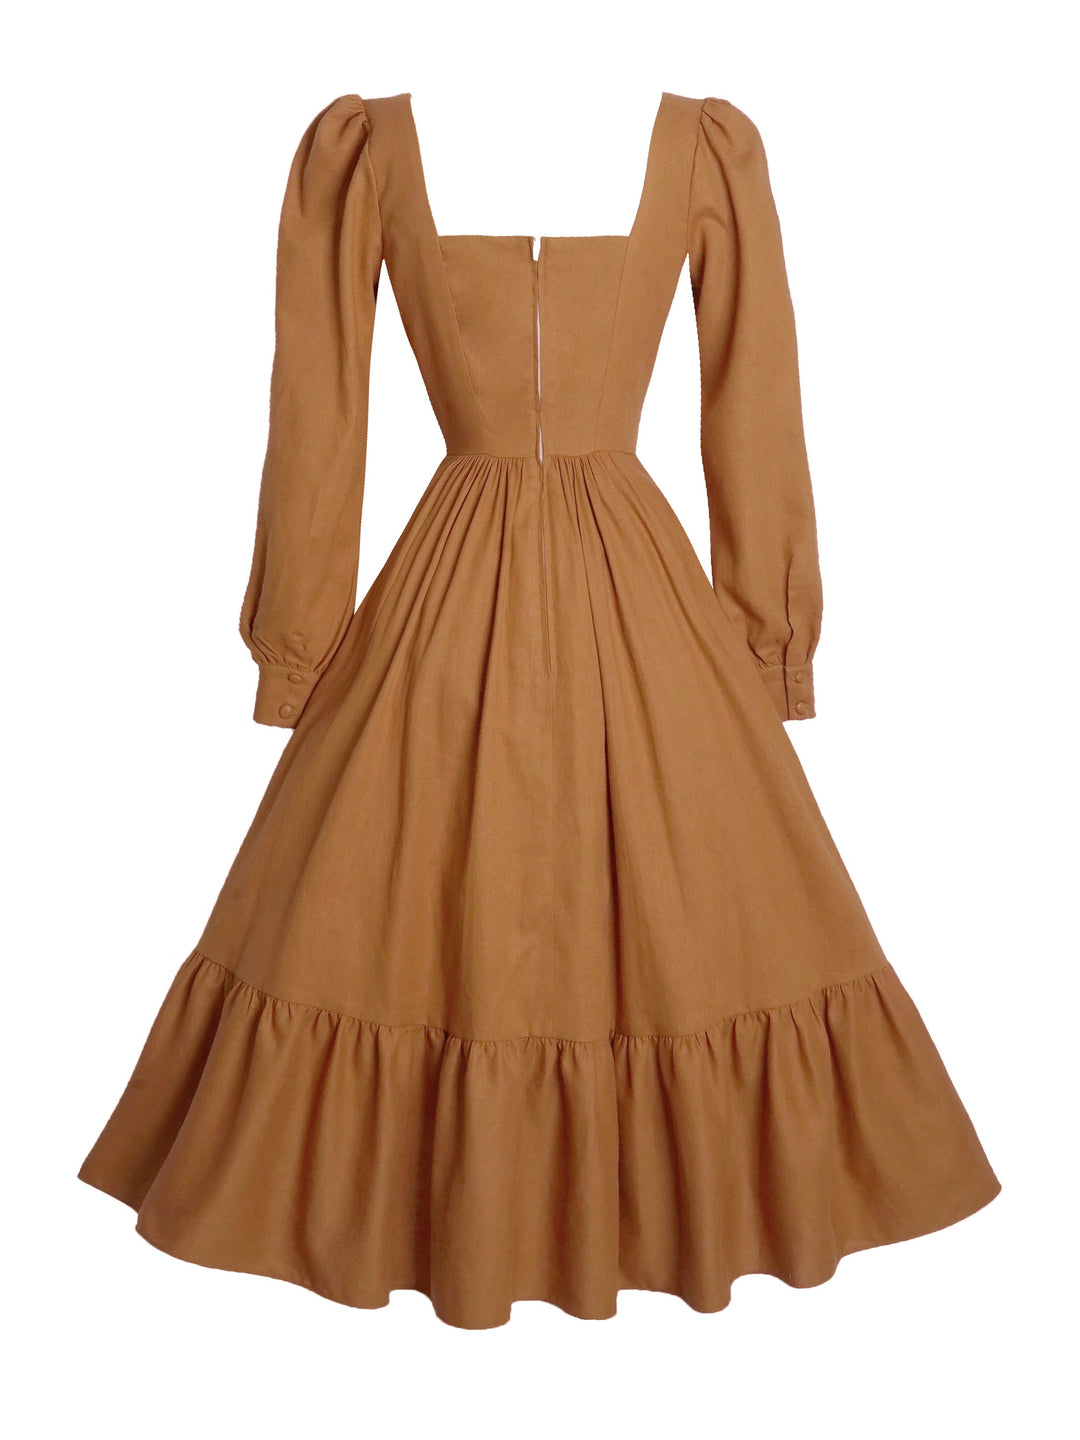 MTO - Mary Dress in Caramel Linen